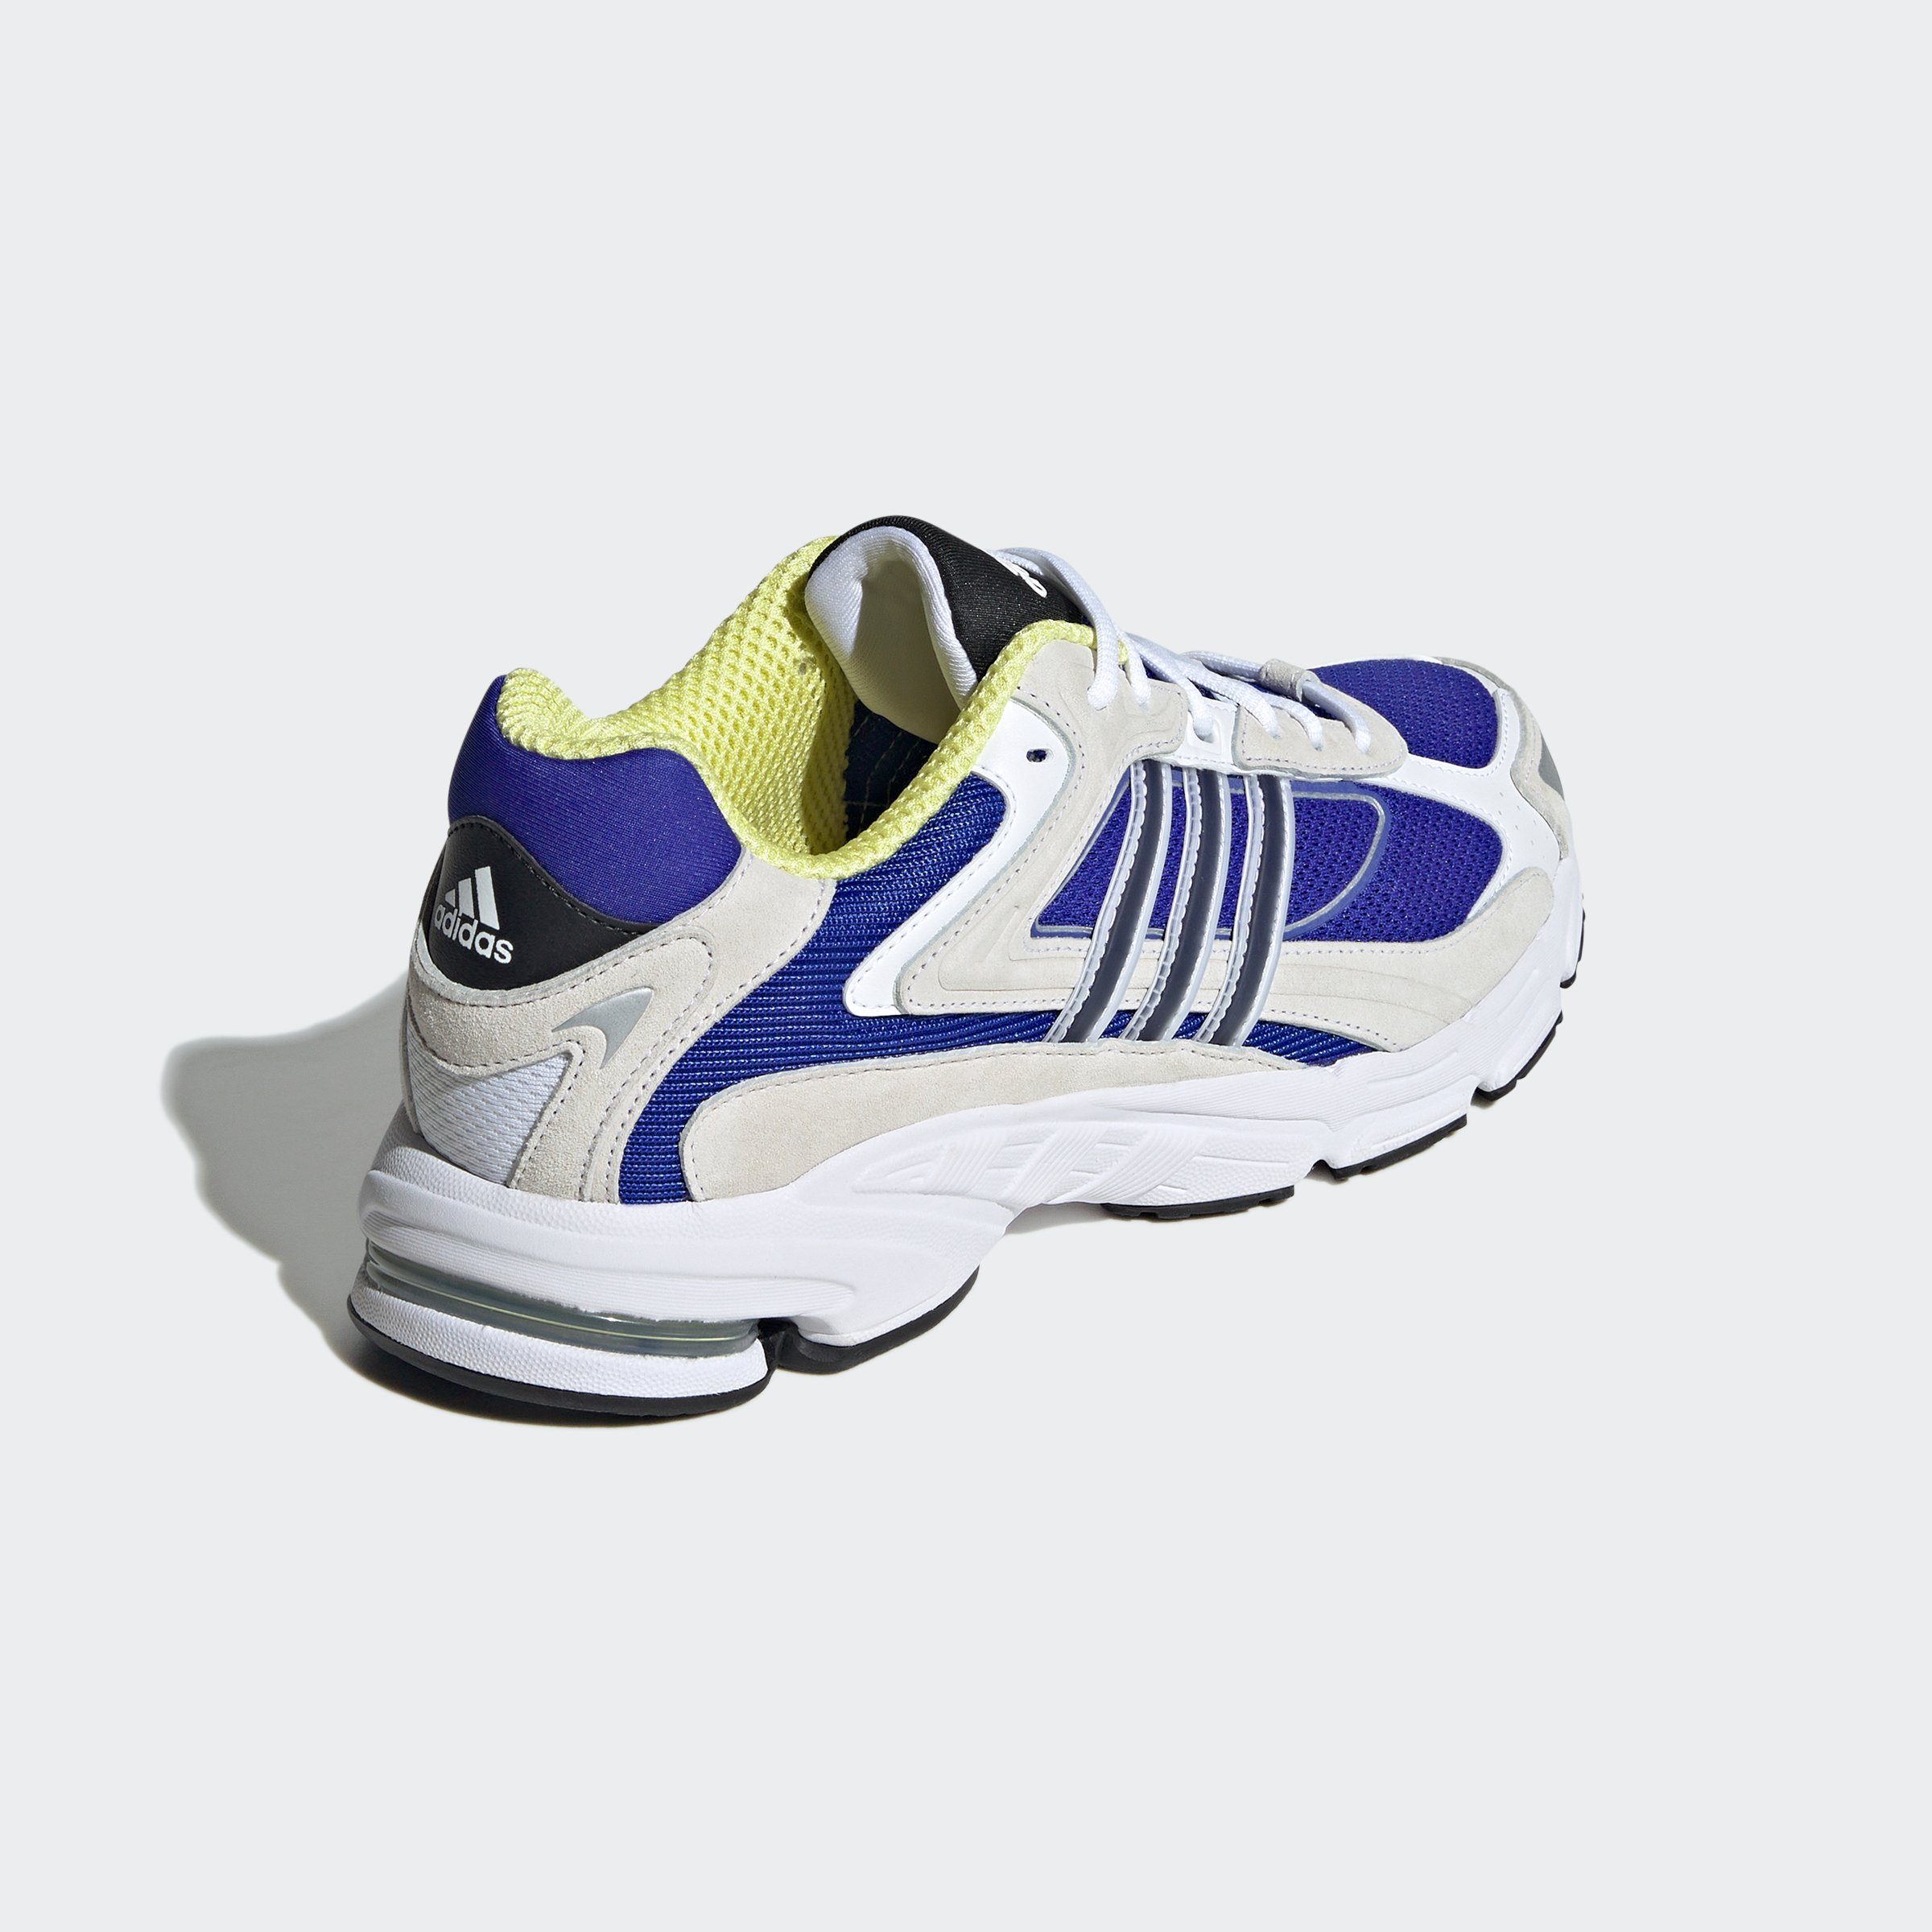 Lucid Sneaker Originals CL Blue Black adidas Cloud Core / White / RESPONSE